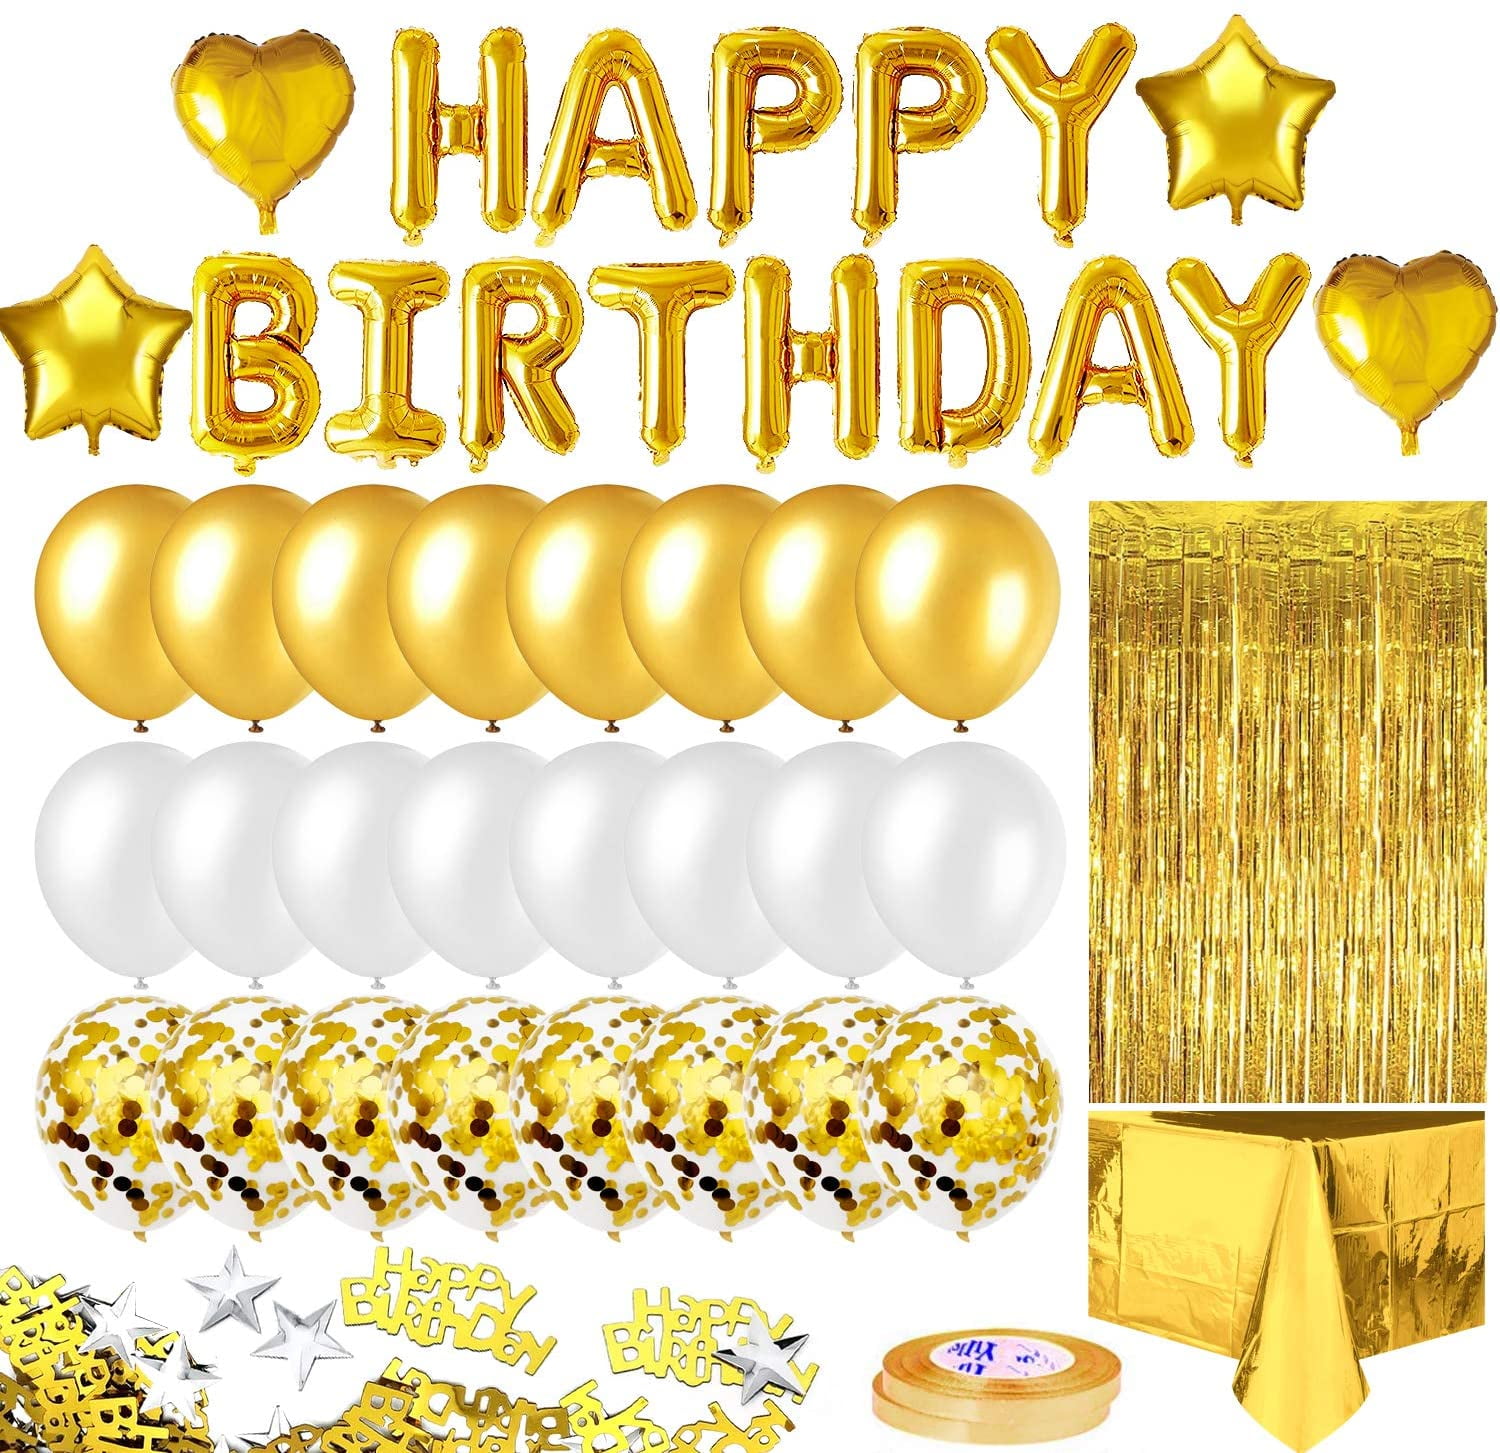 Adorox 16 Inches Happy Birthday Metallic Aluminum Foil Birthday Balloon Banner Gold